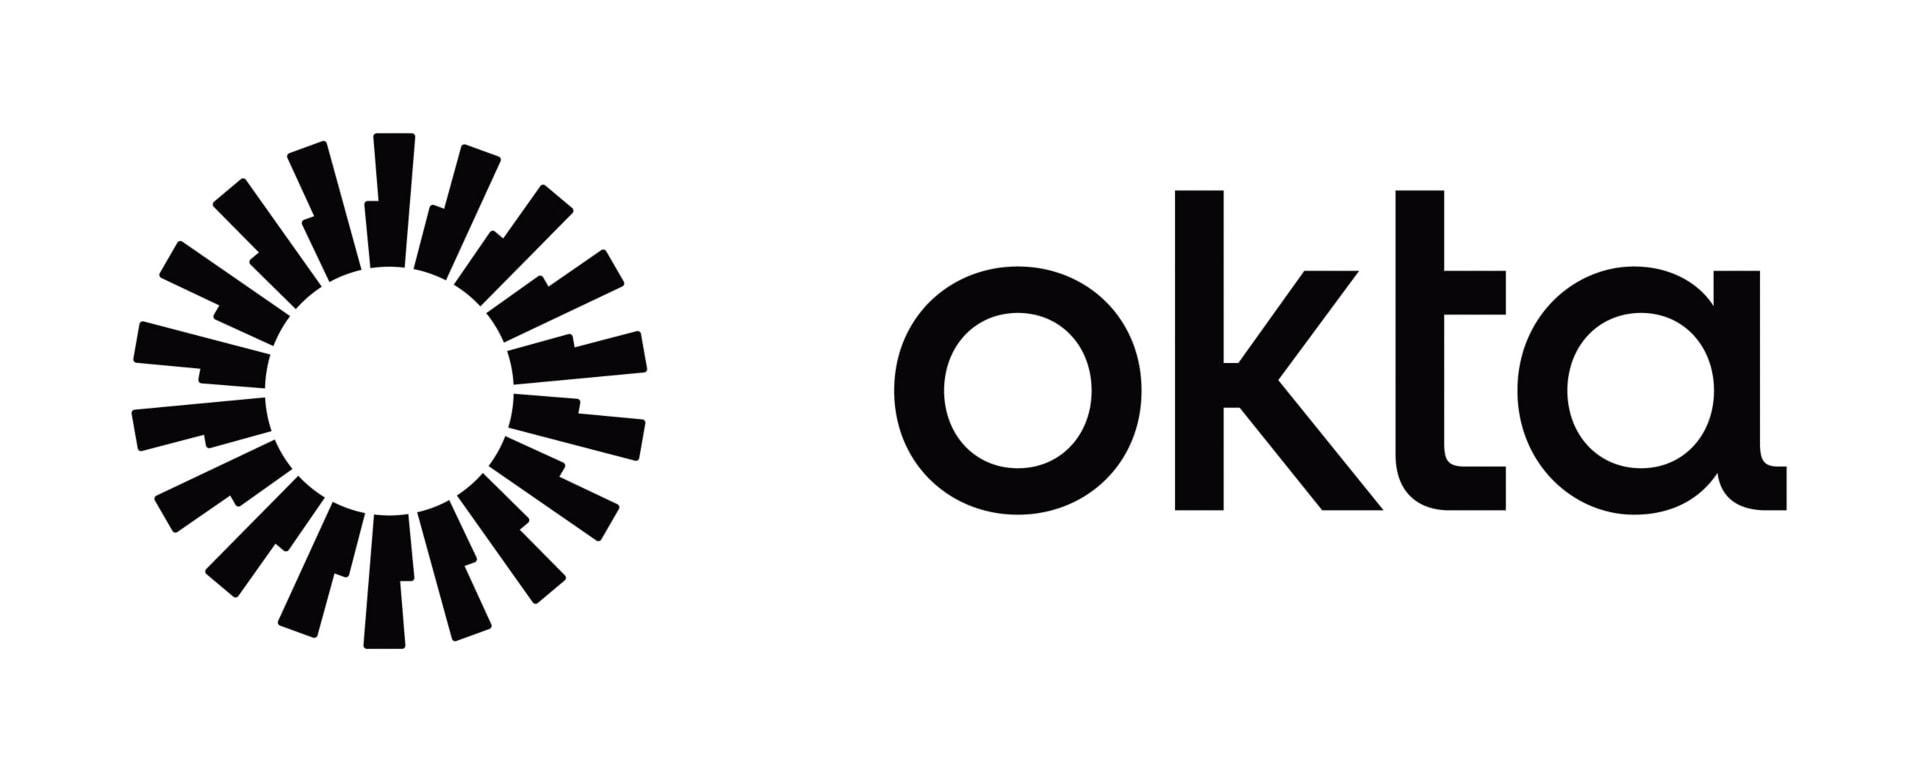 Okta Enterprise - subscription license (1 year) - 50000 MAUs